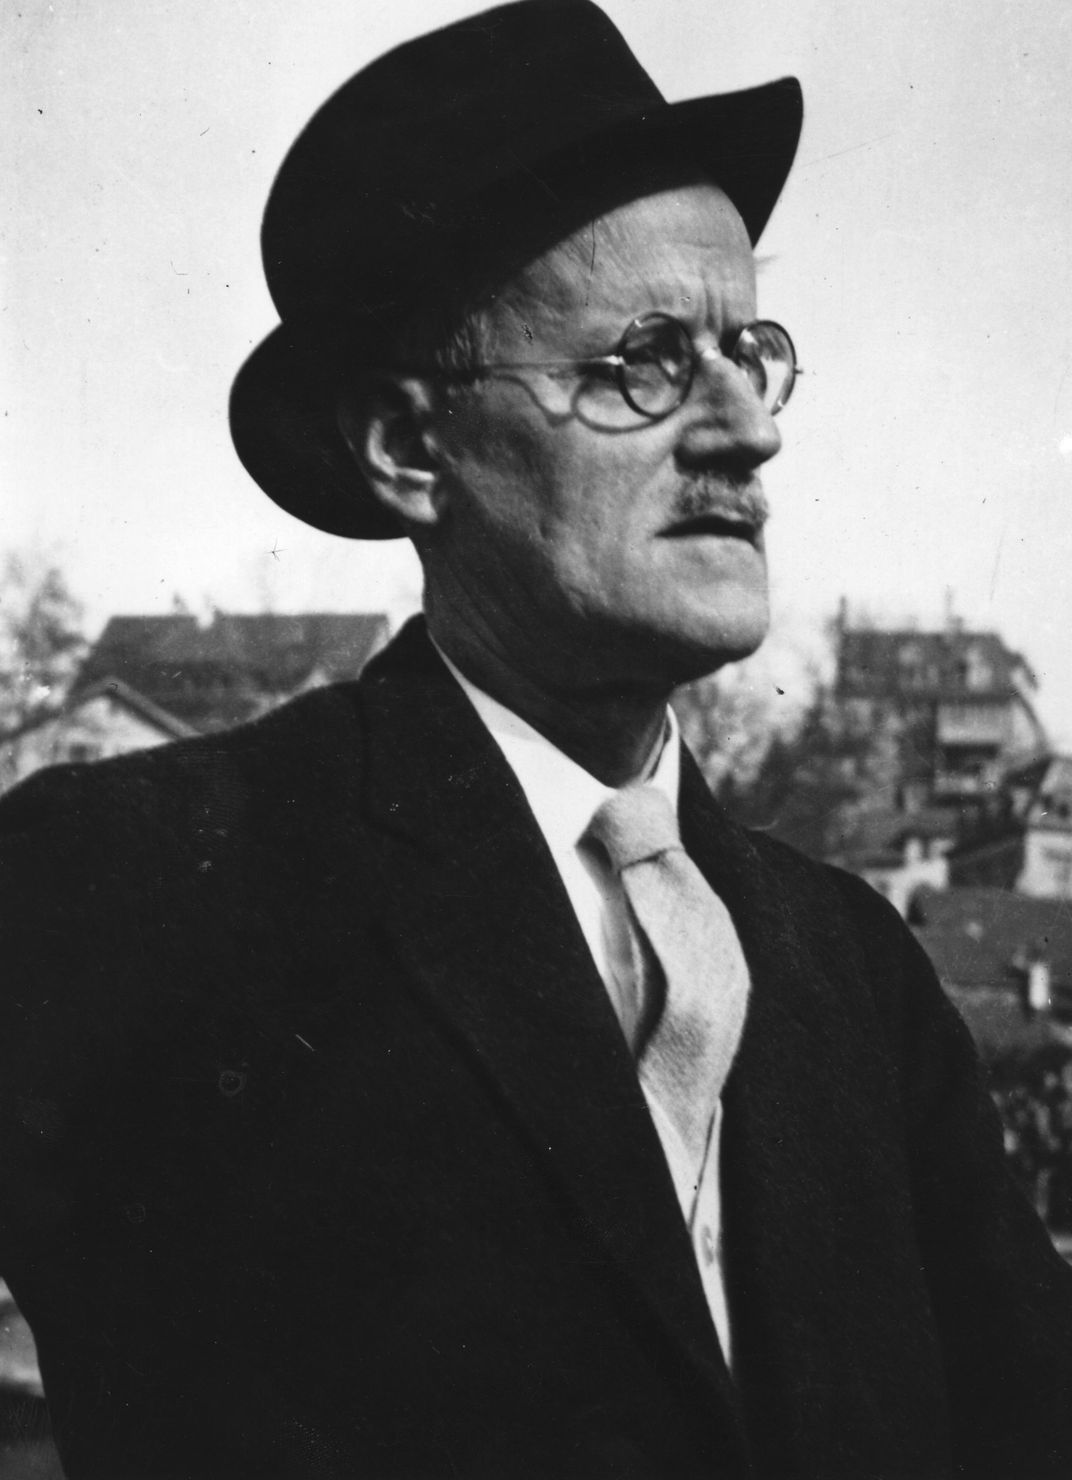 Dublin Wants to Reclaim James Joyce's Body Before the Centenary of 'Ulysses'